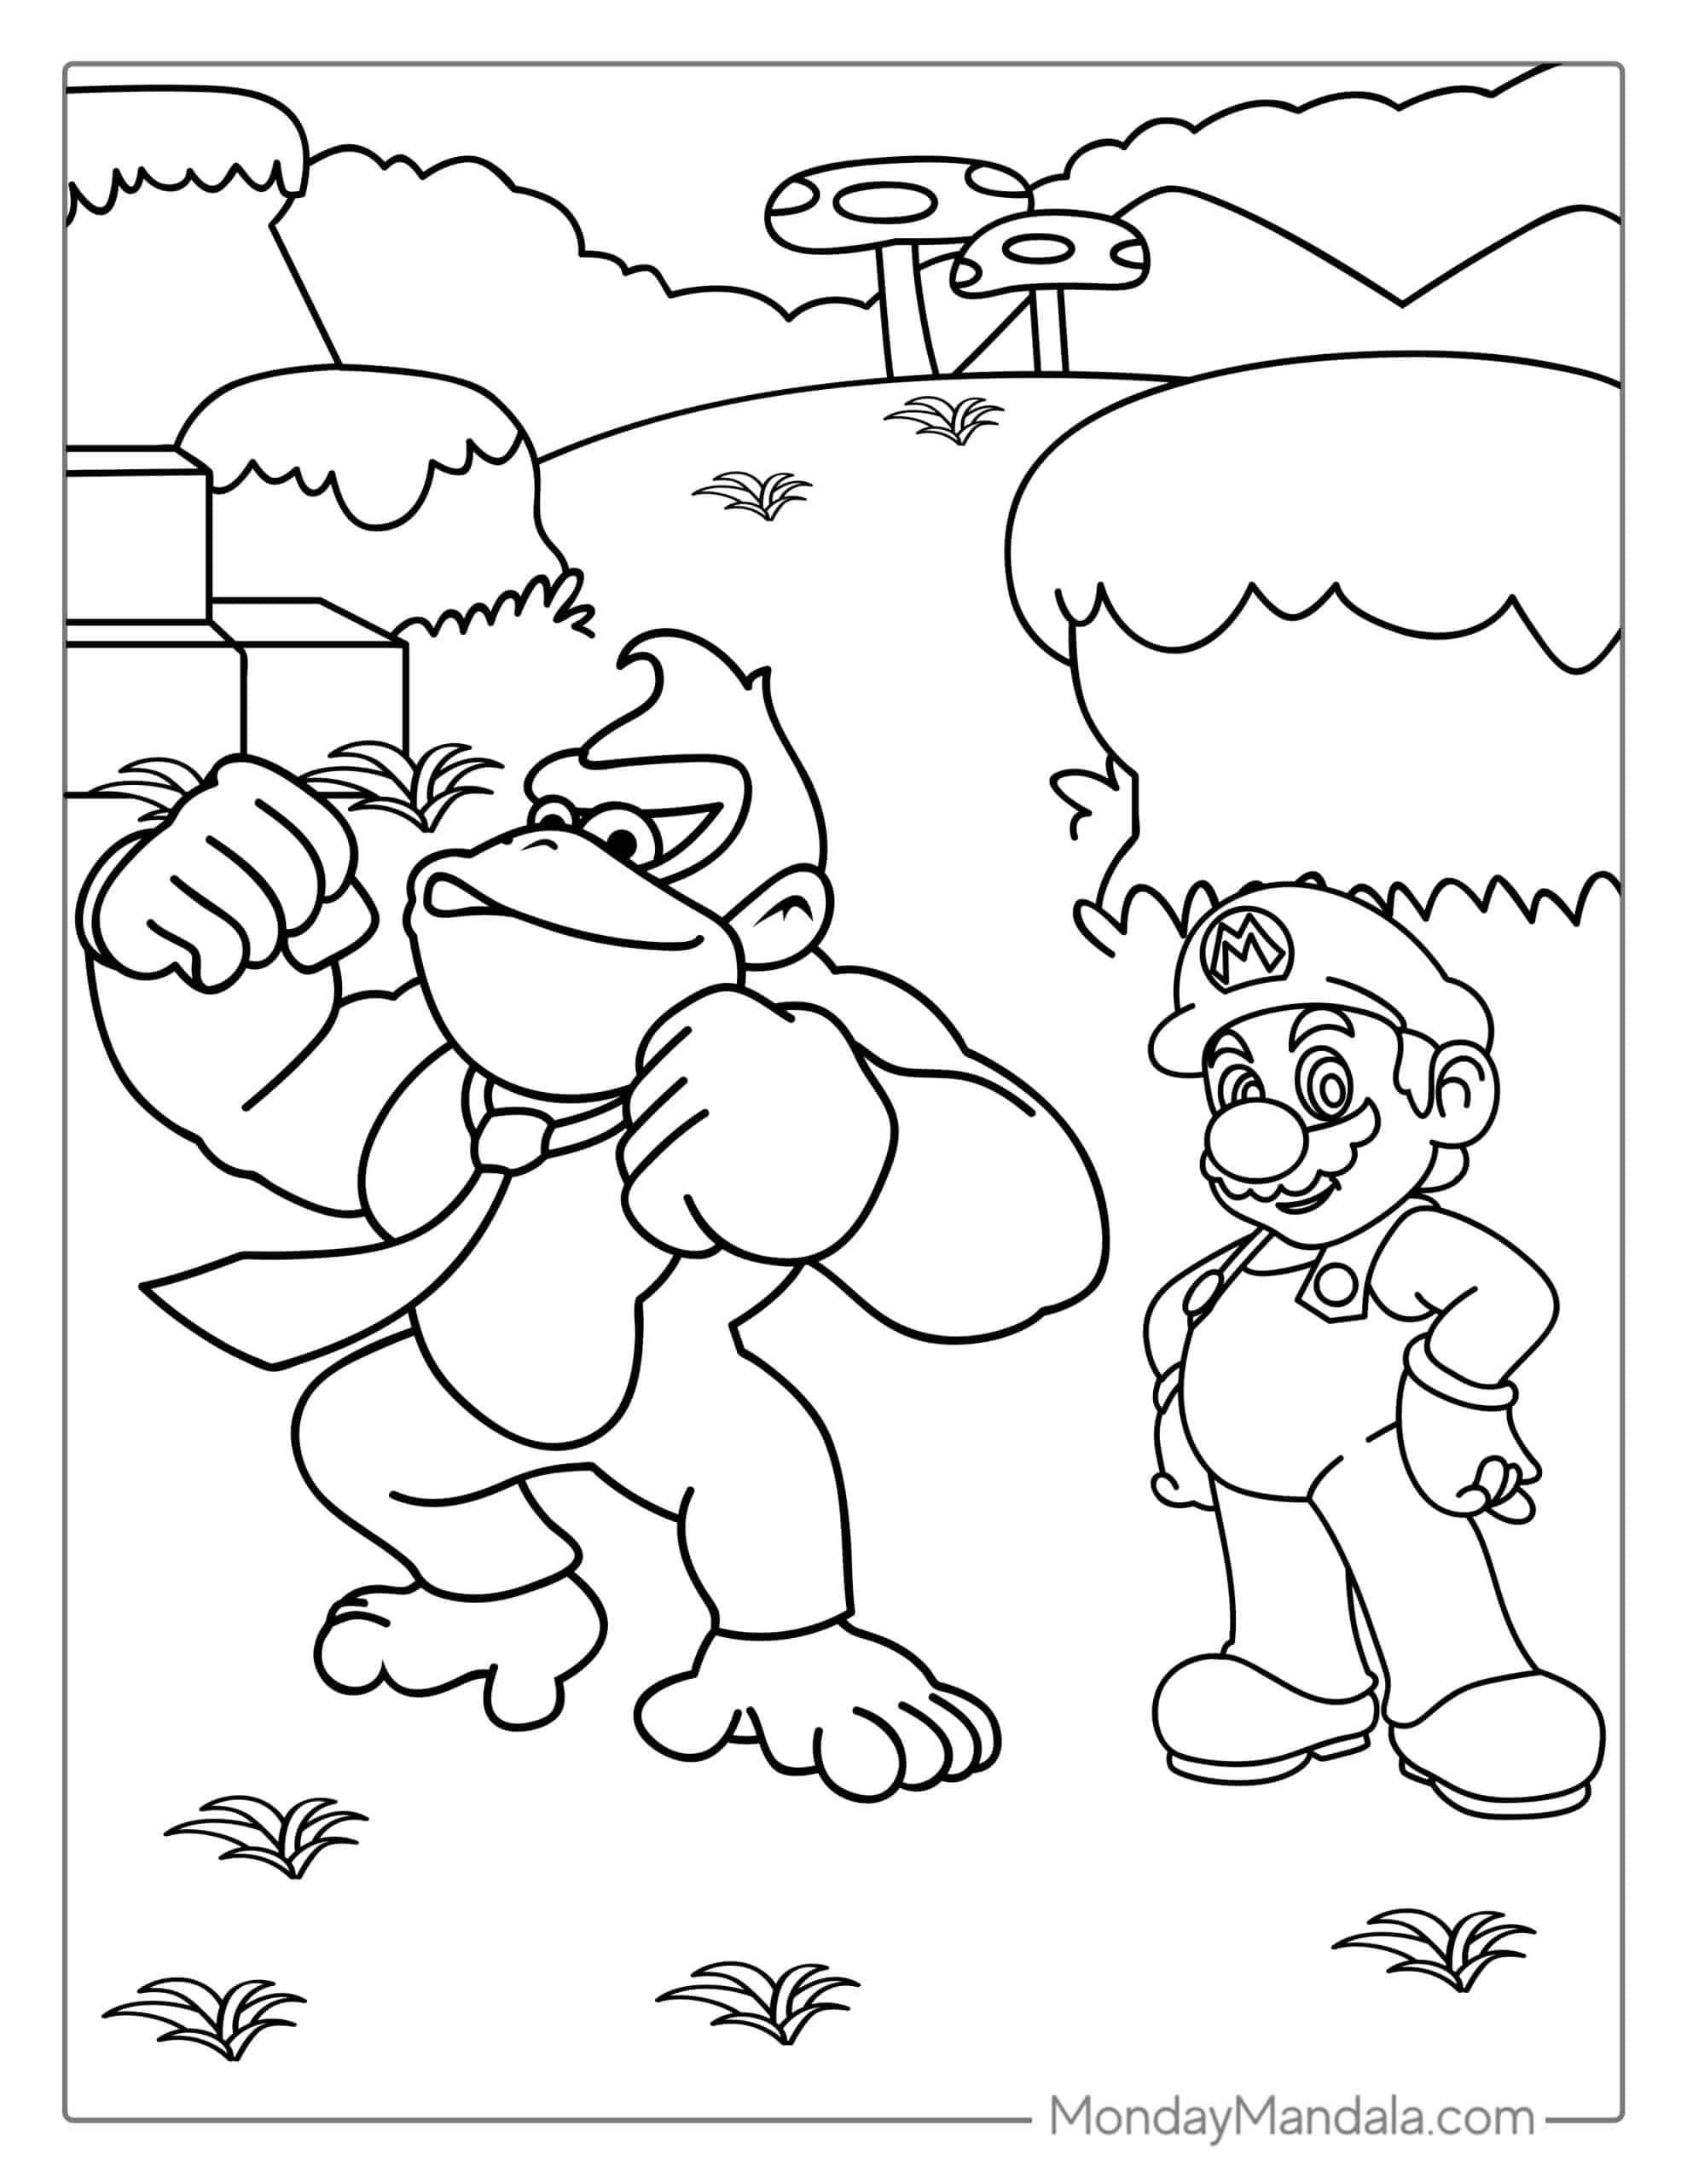 Mario coloring pages free pdf printables mario coloring pages super mario coloring pages coloring pages